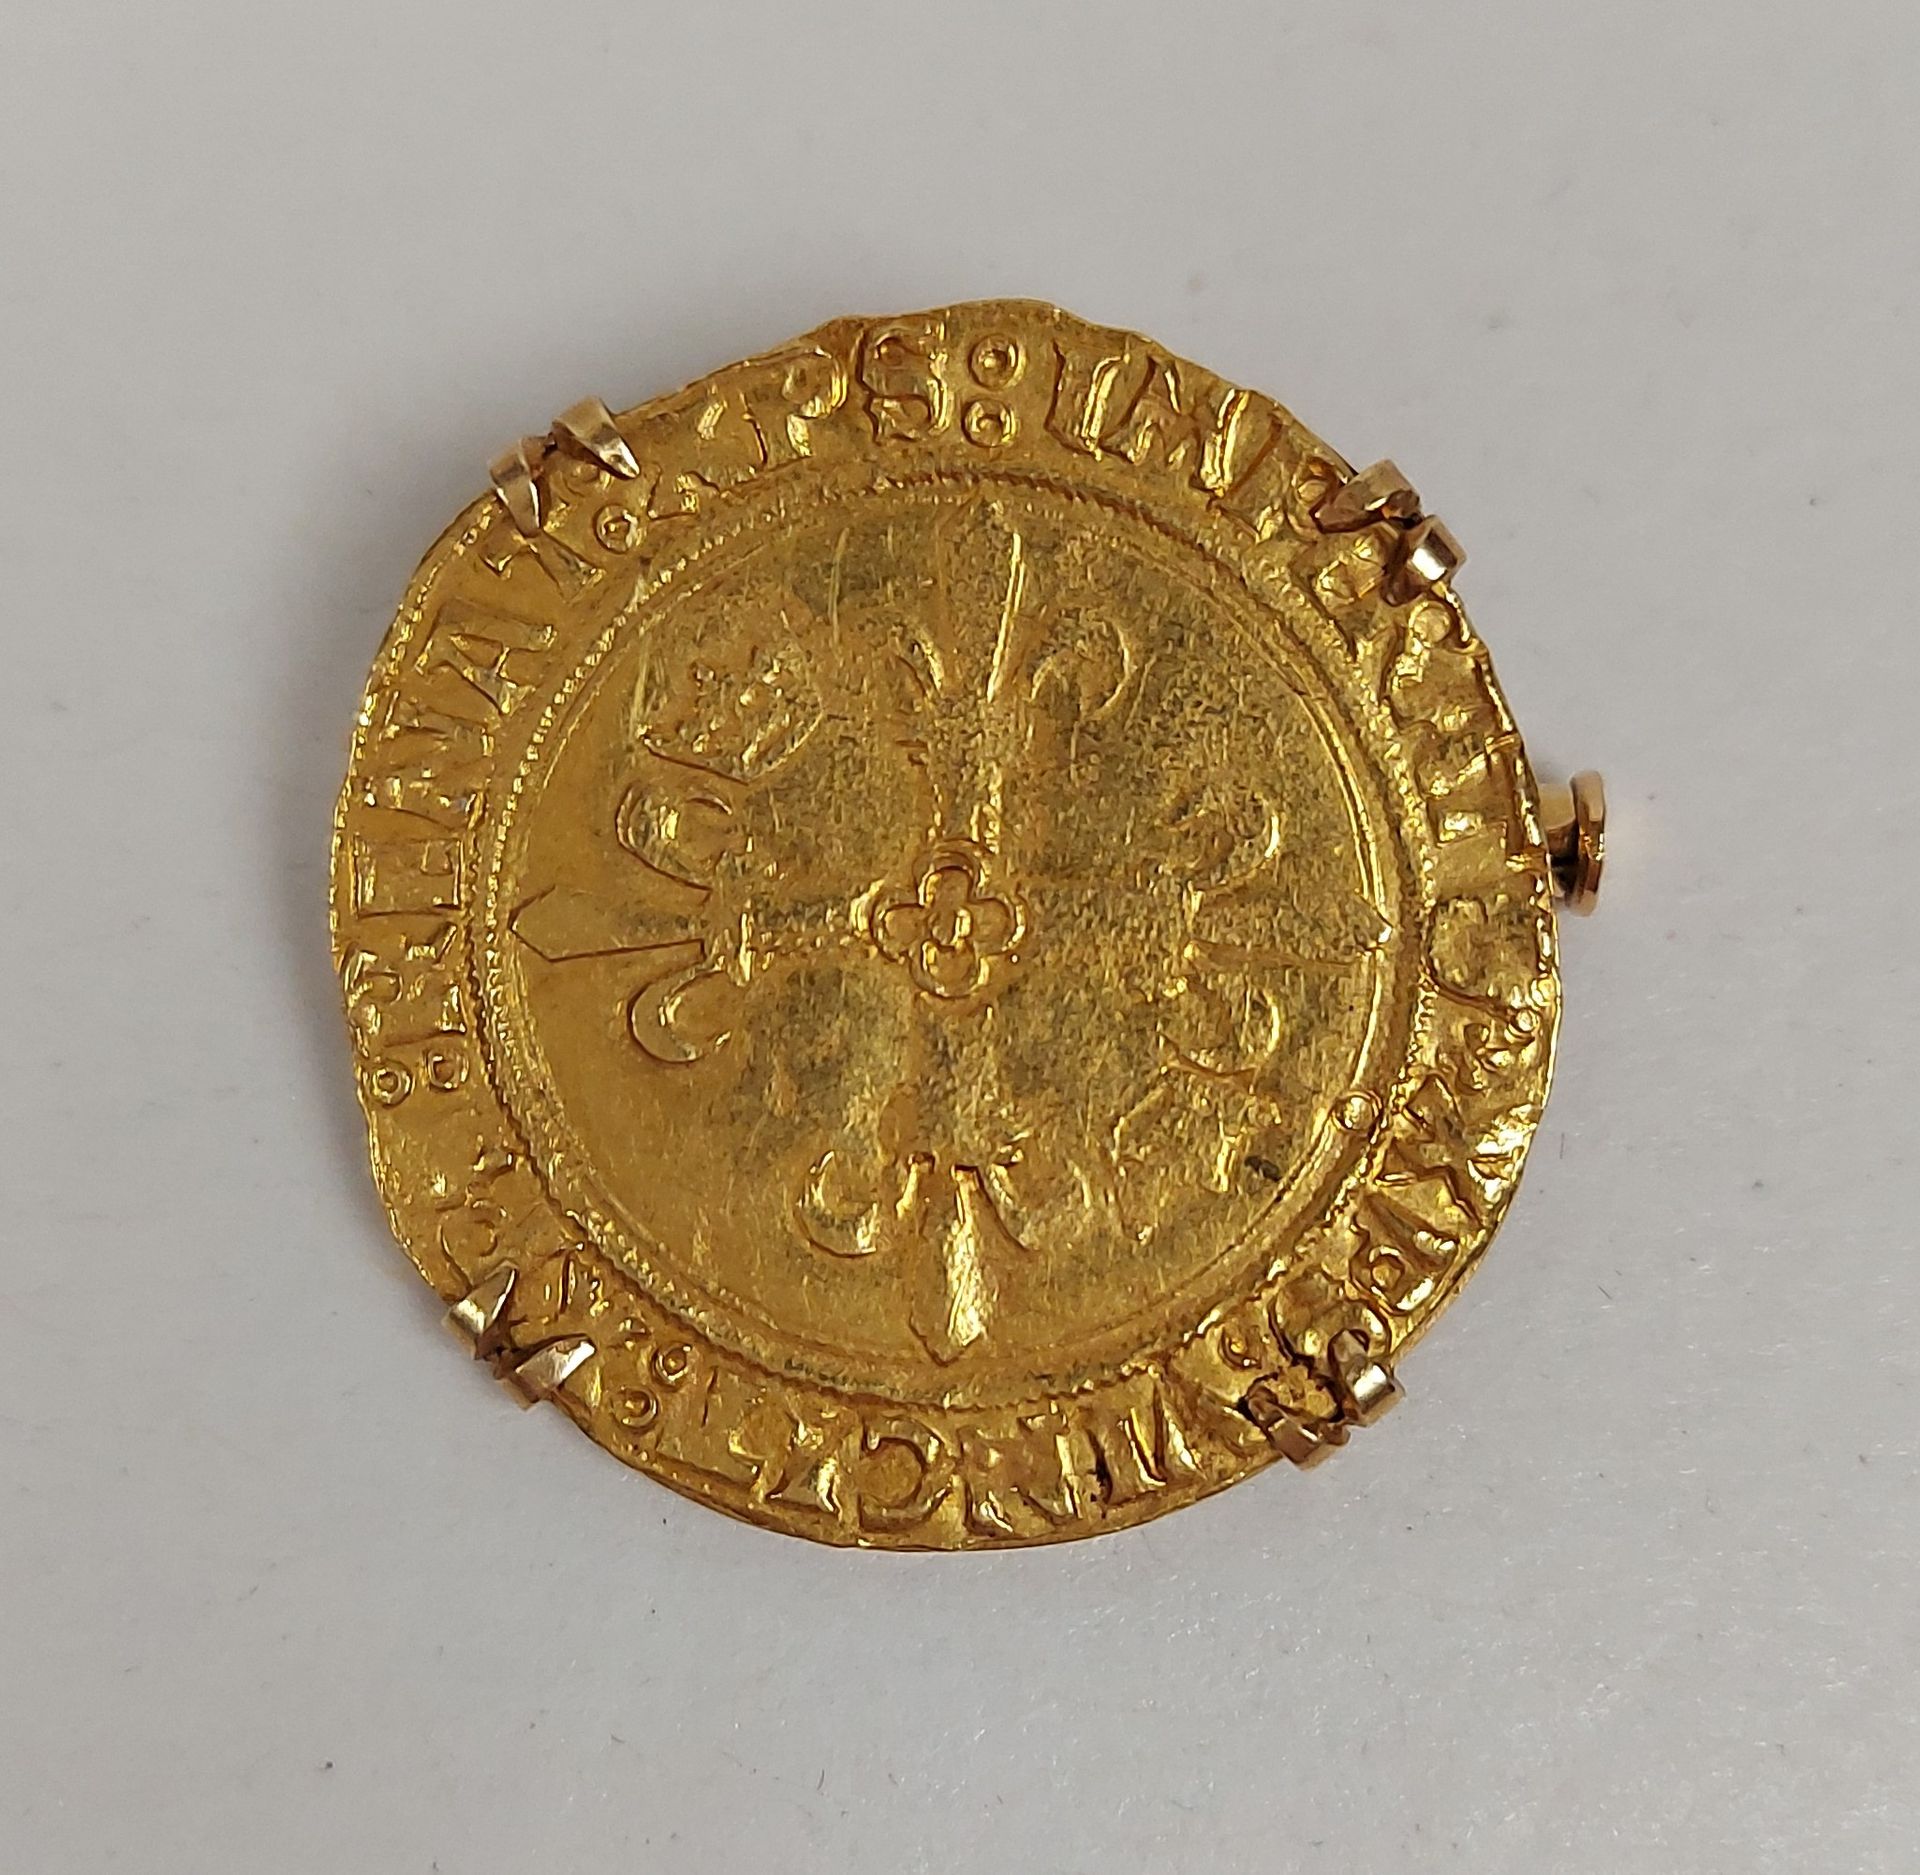 Null 法兰西王国 - 弗朗索瓦-伊尔（1515-1547 年）
多菲内阳光下的金鱼》，第 4 版，克雷米厄（X 信），1515-1528 年
Dupless&hellip;